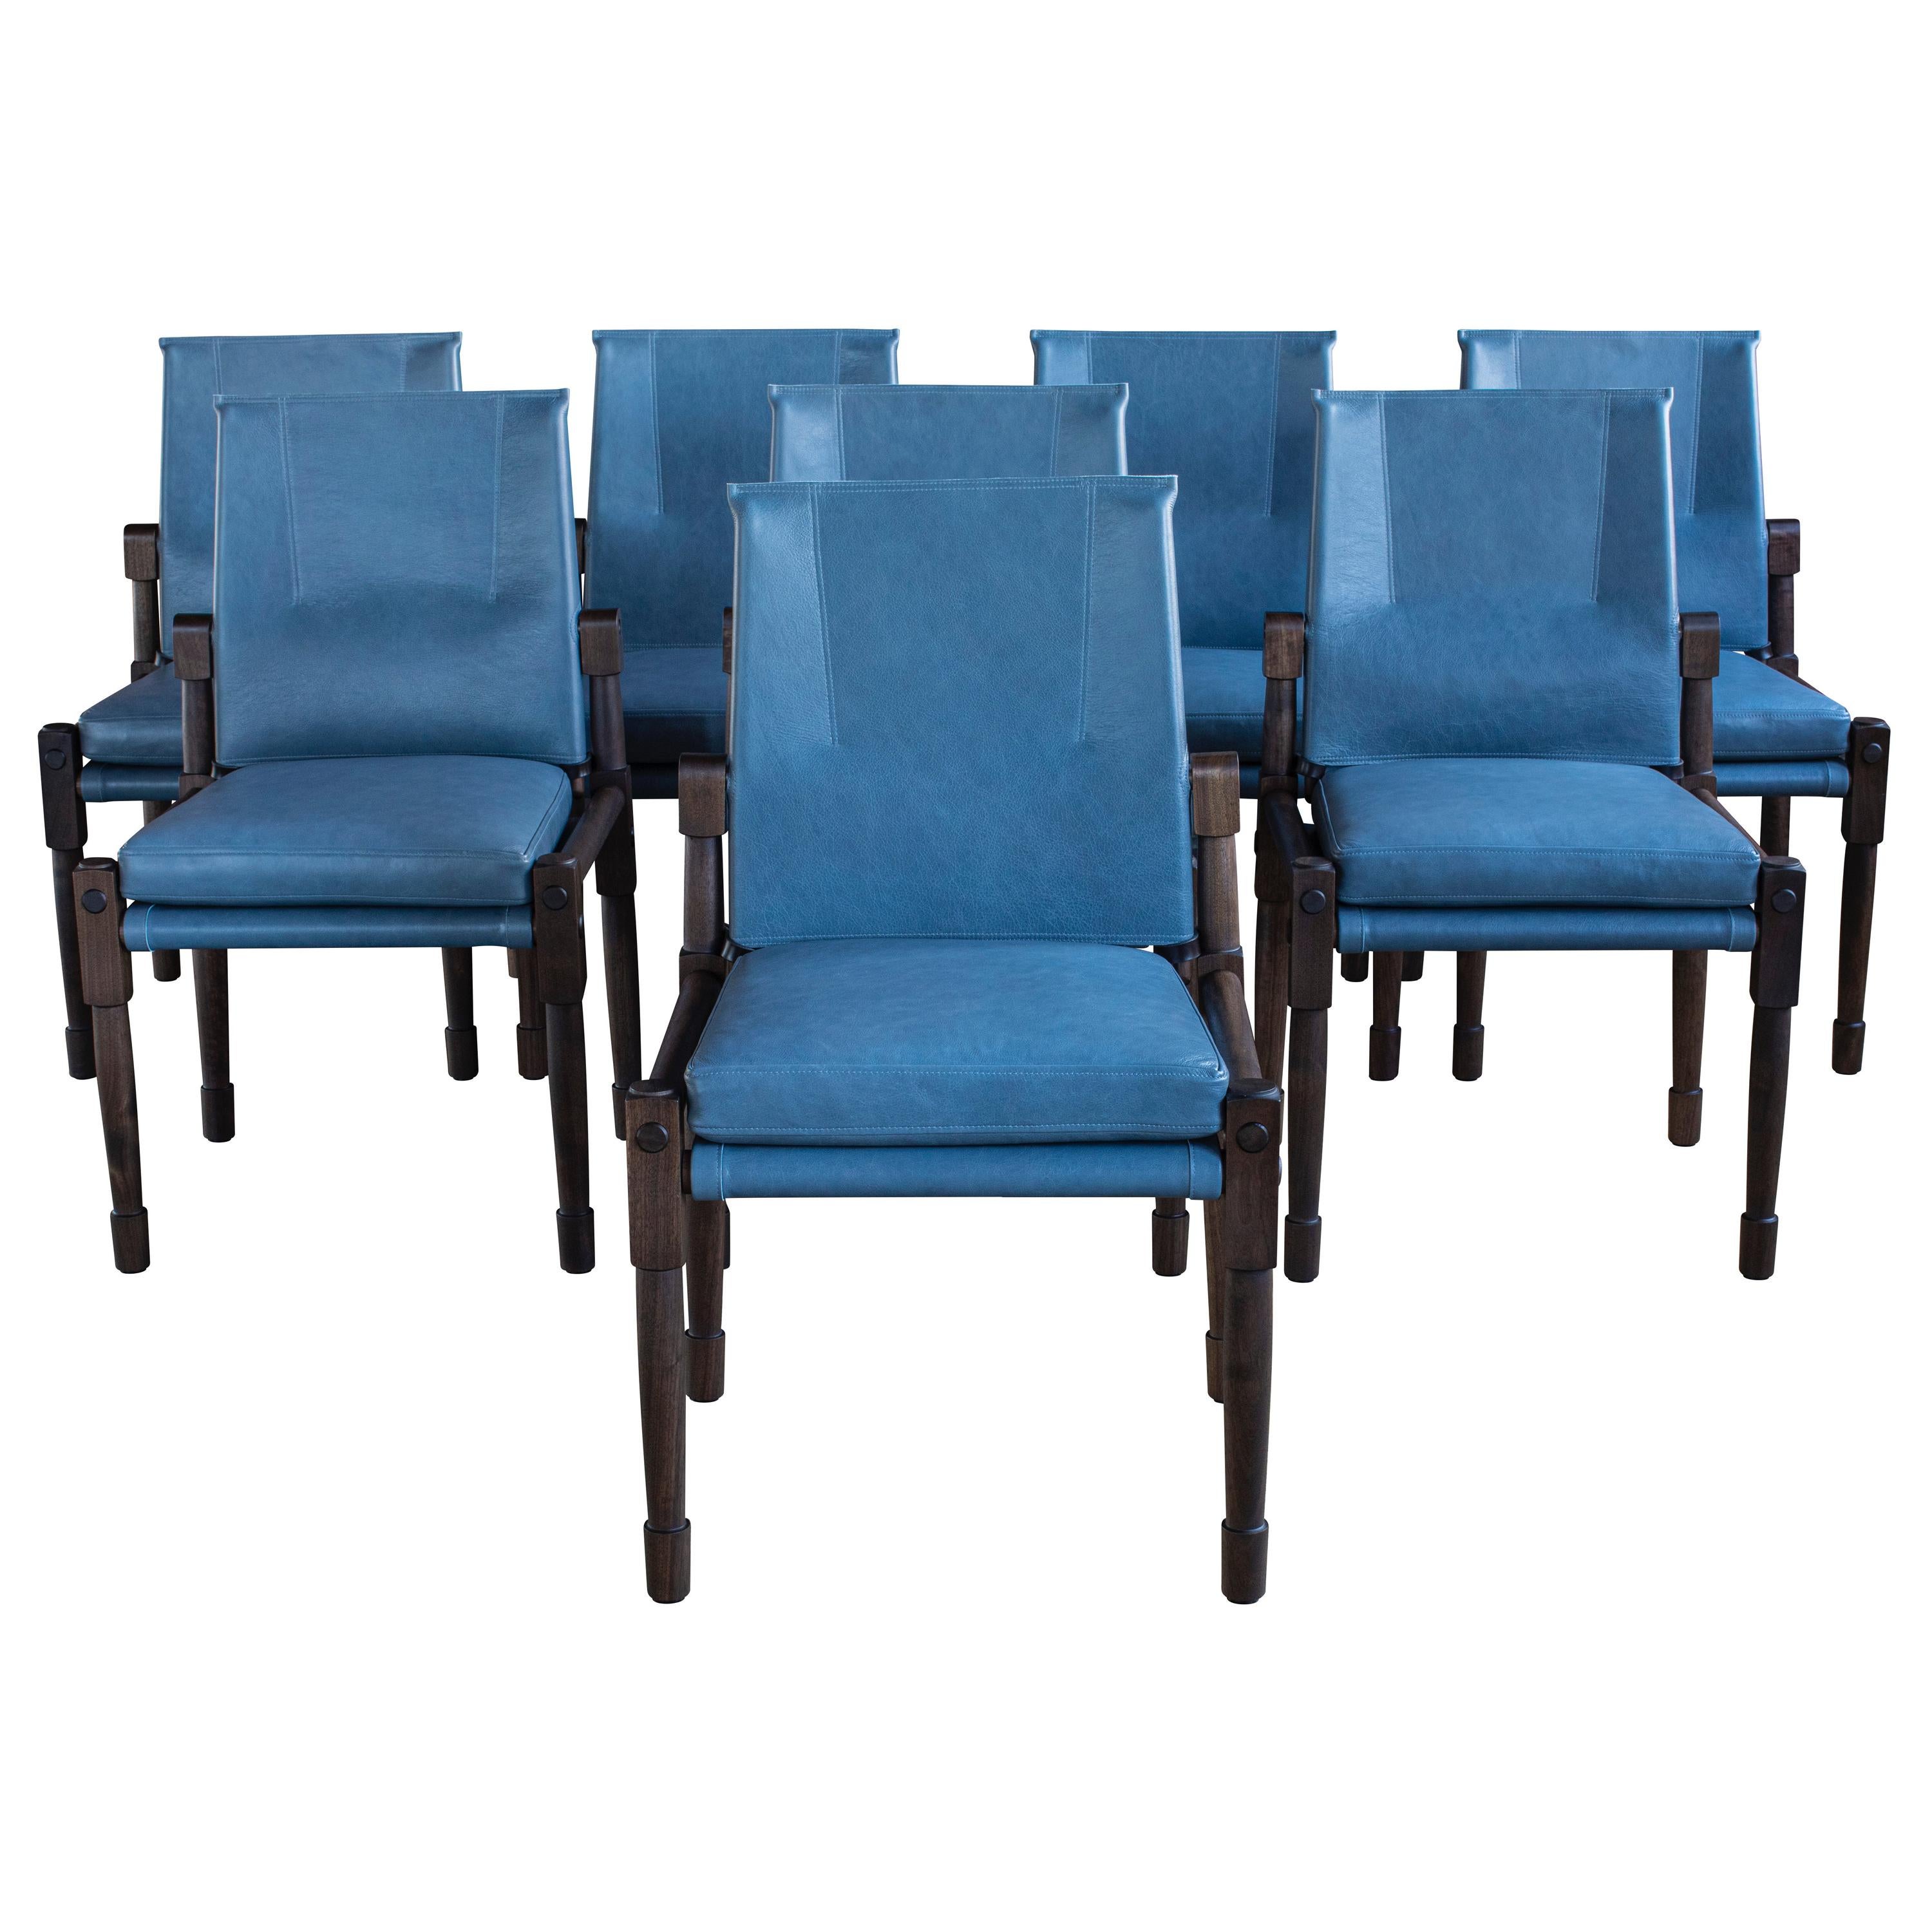 Richard Wrightman Dining Room Chairs